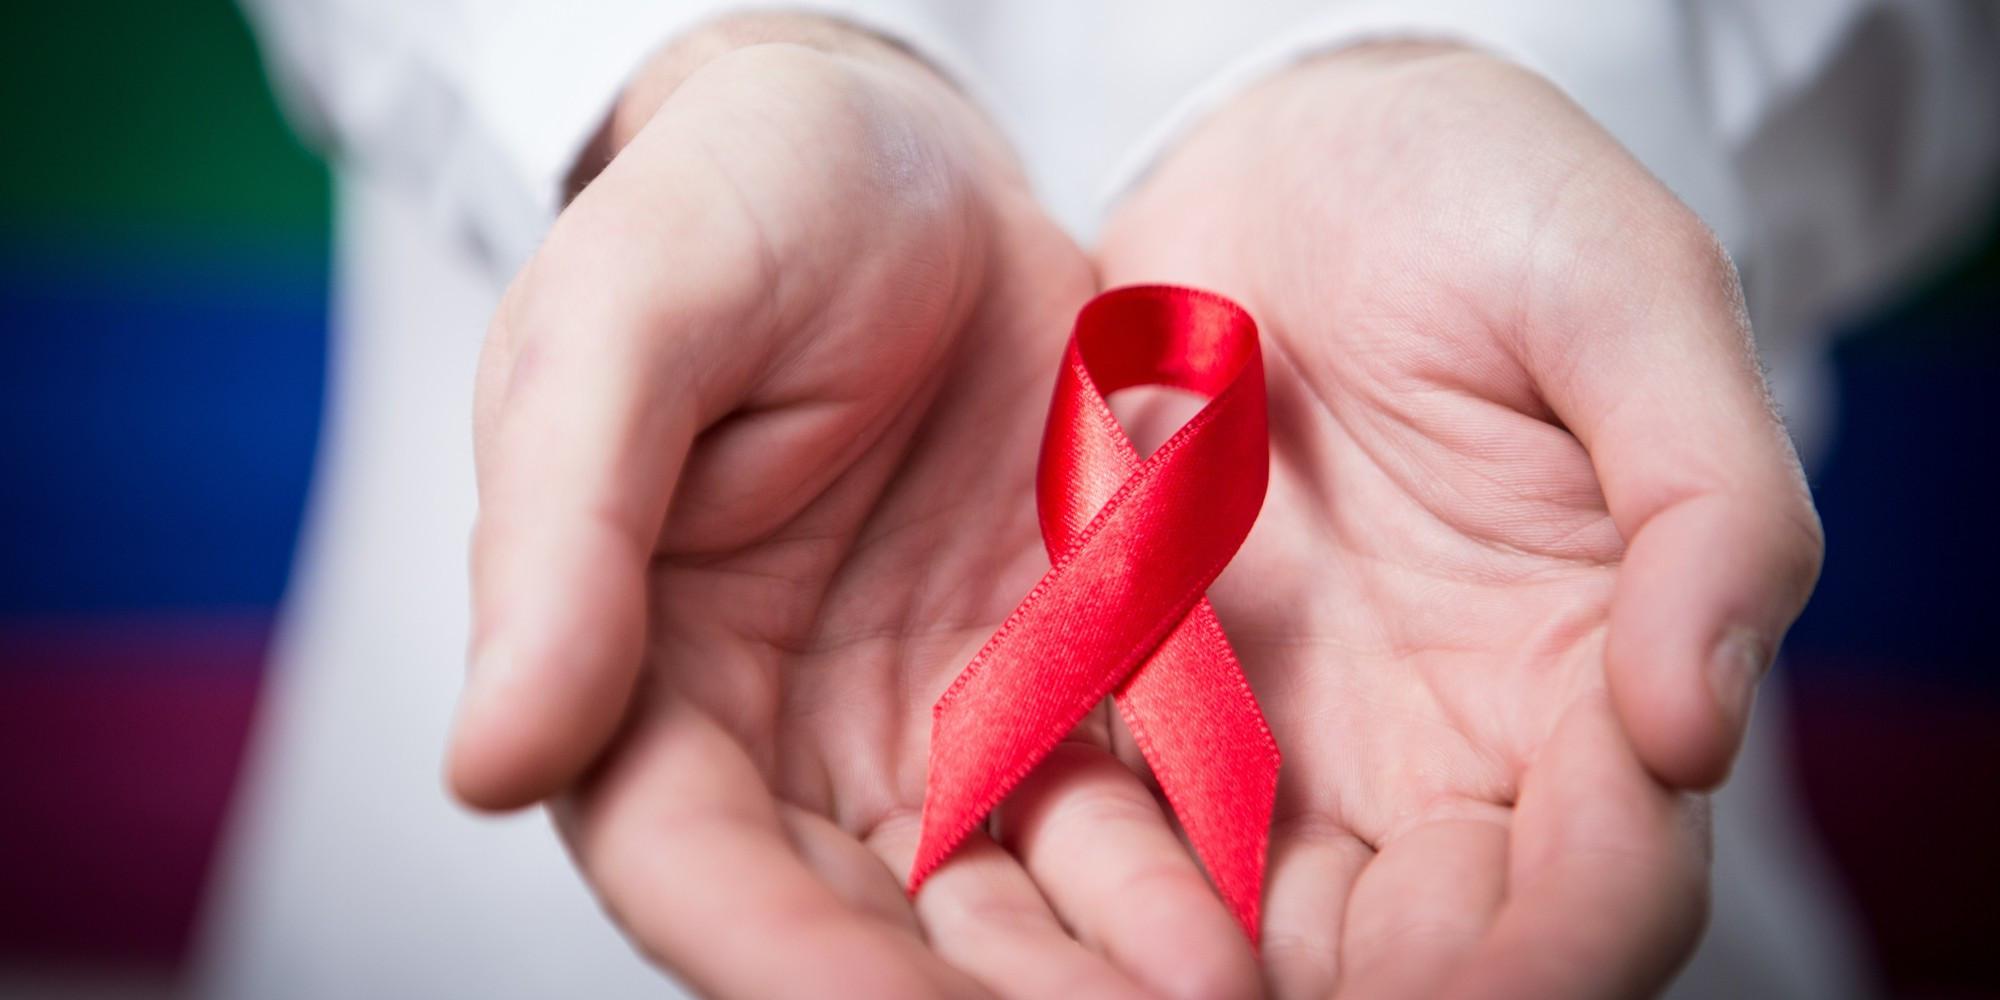 Indonesia Bebas Hiv Aids Di 2030 Bila Semangat Lakukan Upaya